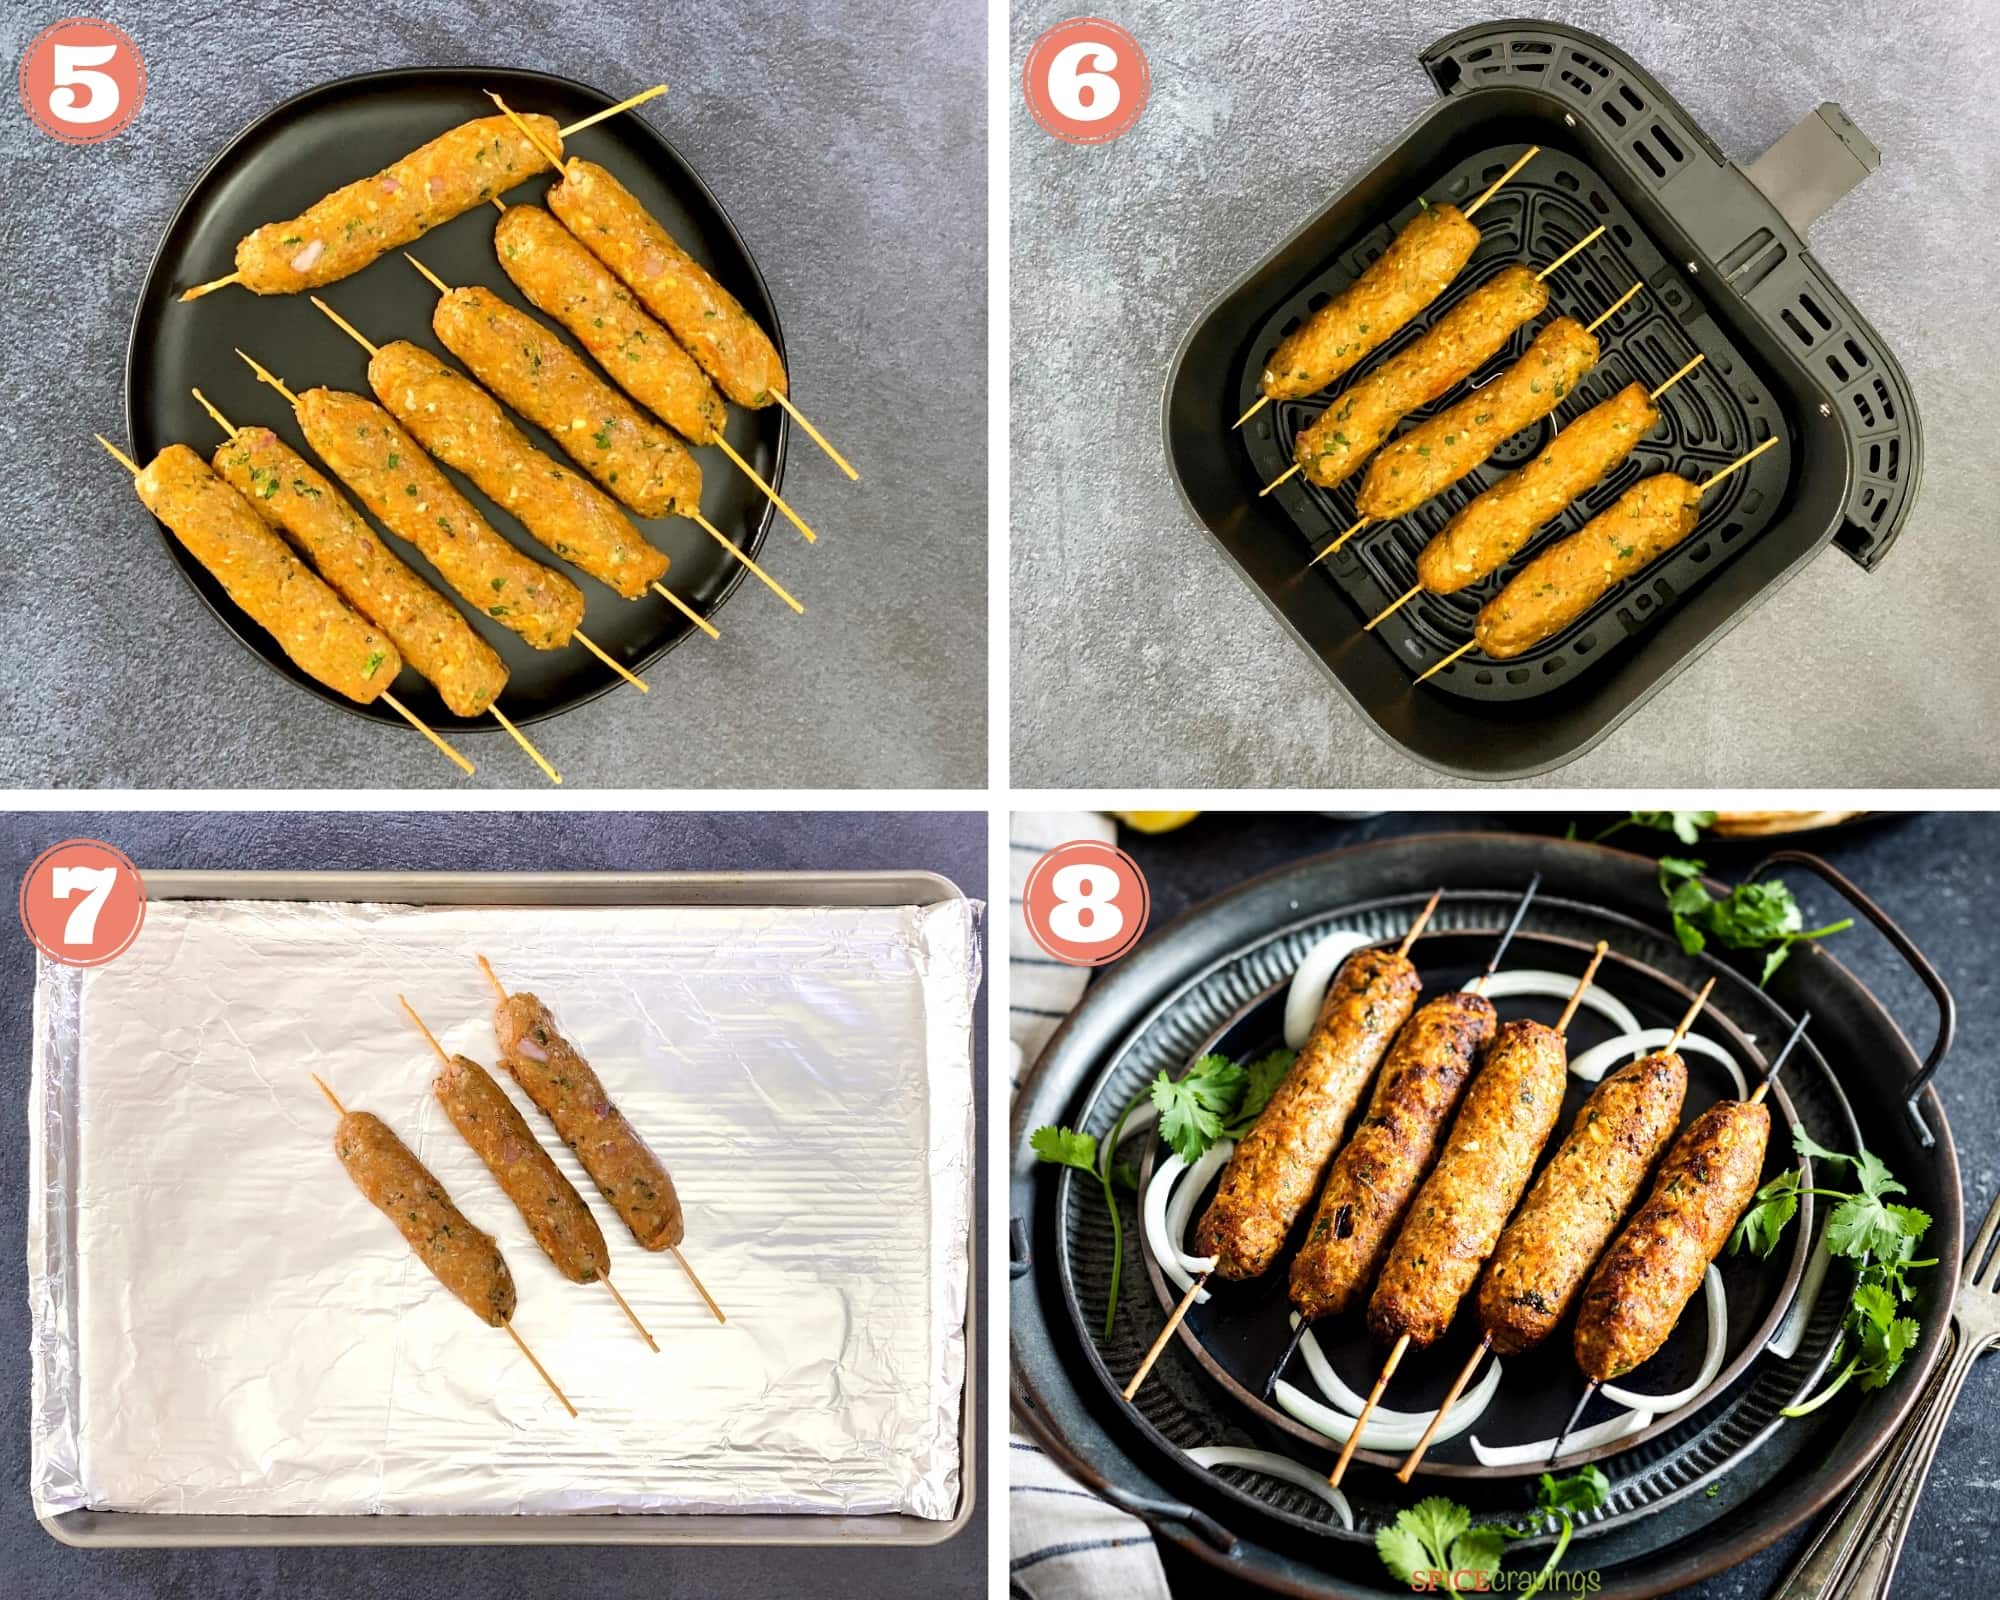 Image grid showing last four steps for making chicken seekh kebab